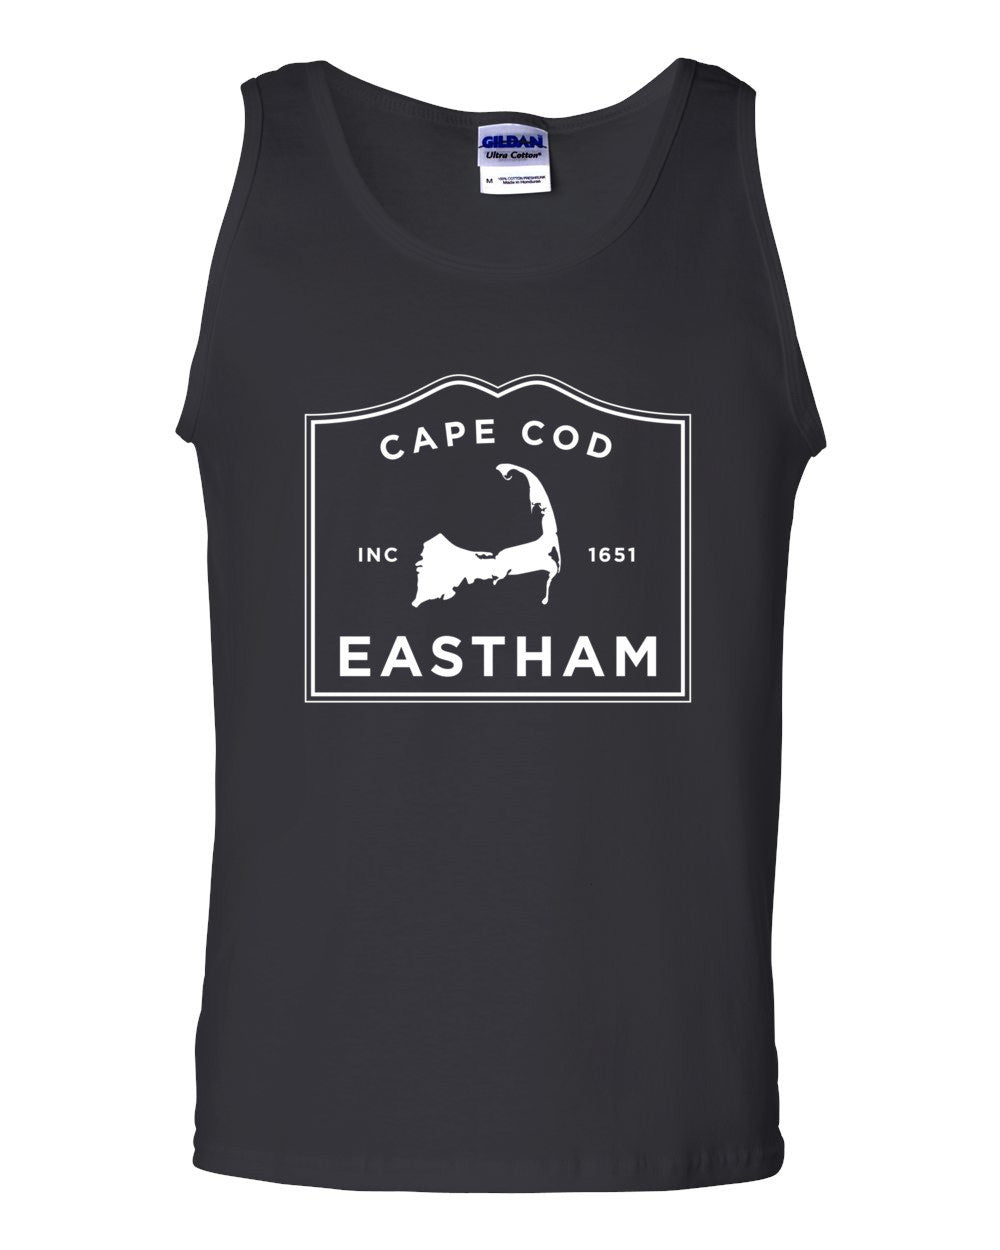 Eastham Cape Cod Tank Top